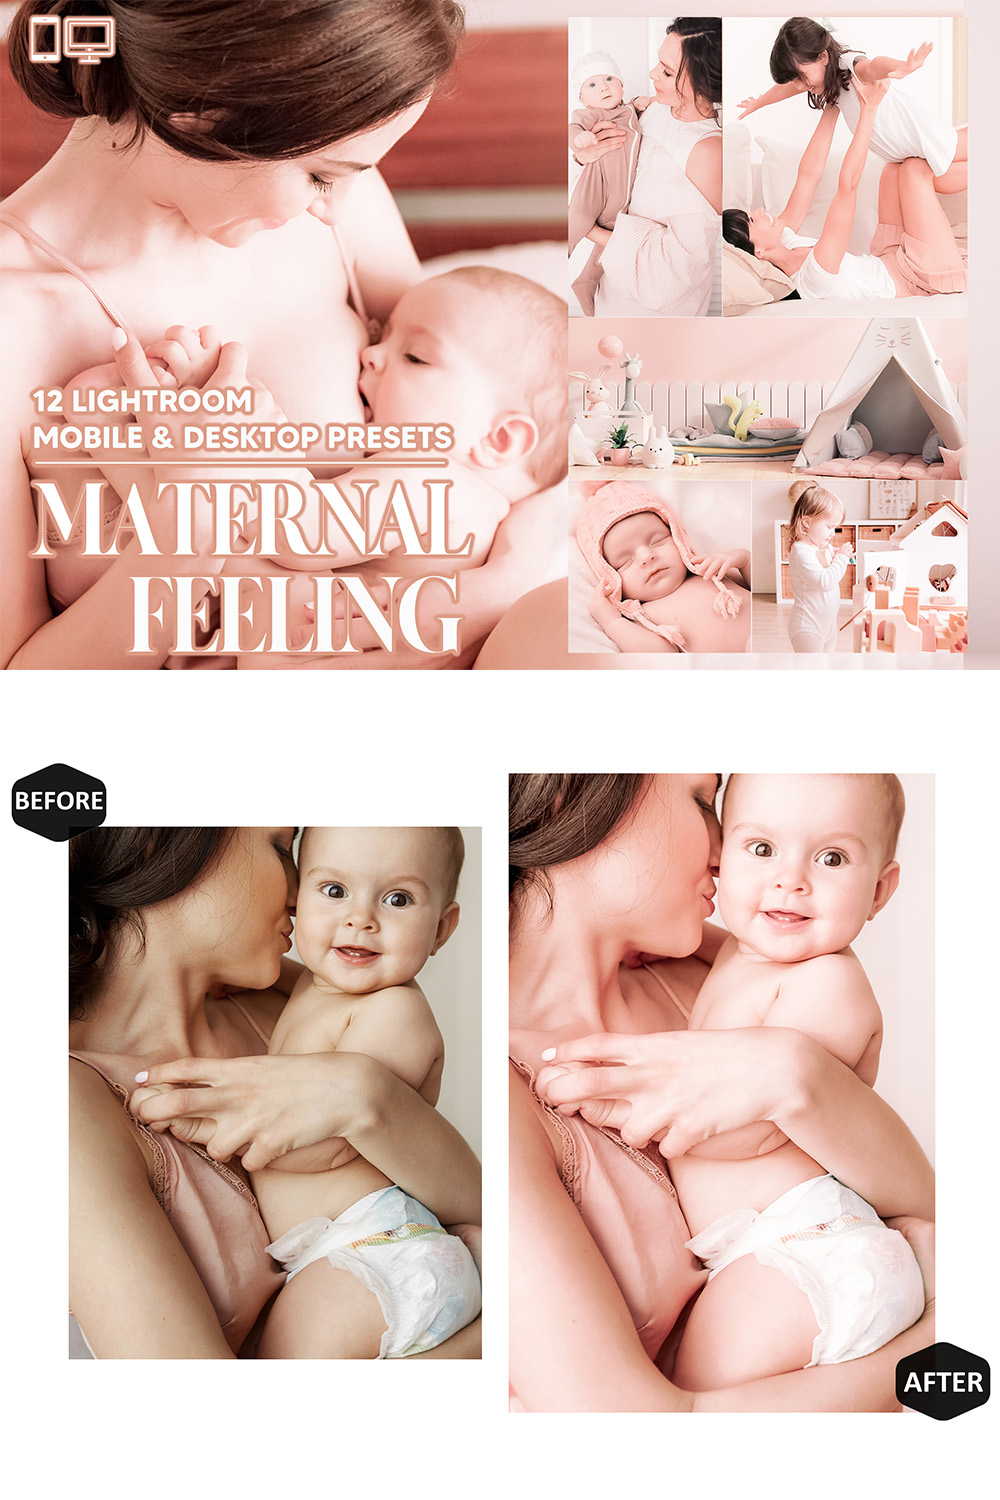 12 Maternal Feeling Lightroom Presets, Mother Mobile Preset, Baby Desktop LR Lifestyle DNG Instagram Cream Filter Theme Portrait Season Clean pinterest preview image.